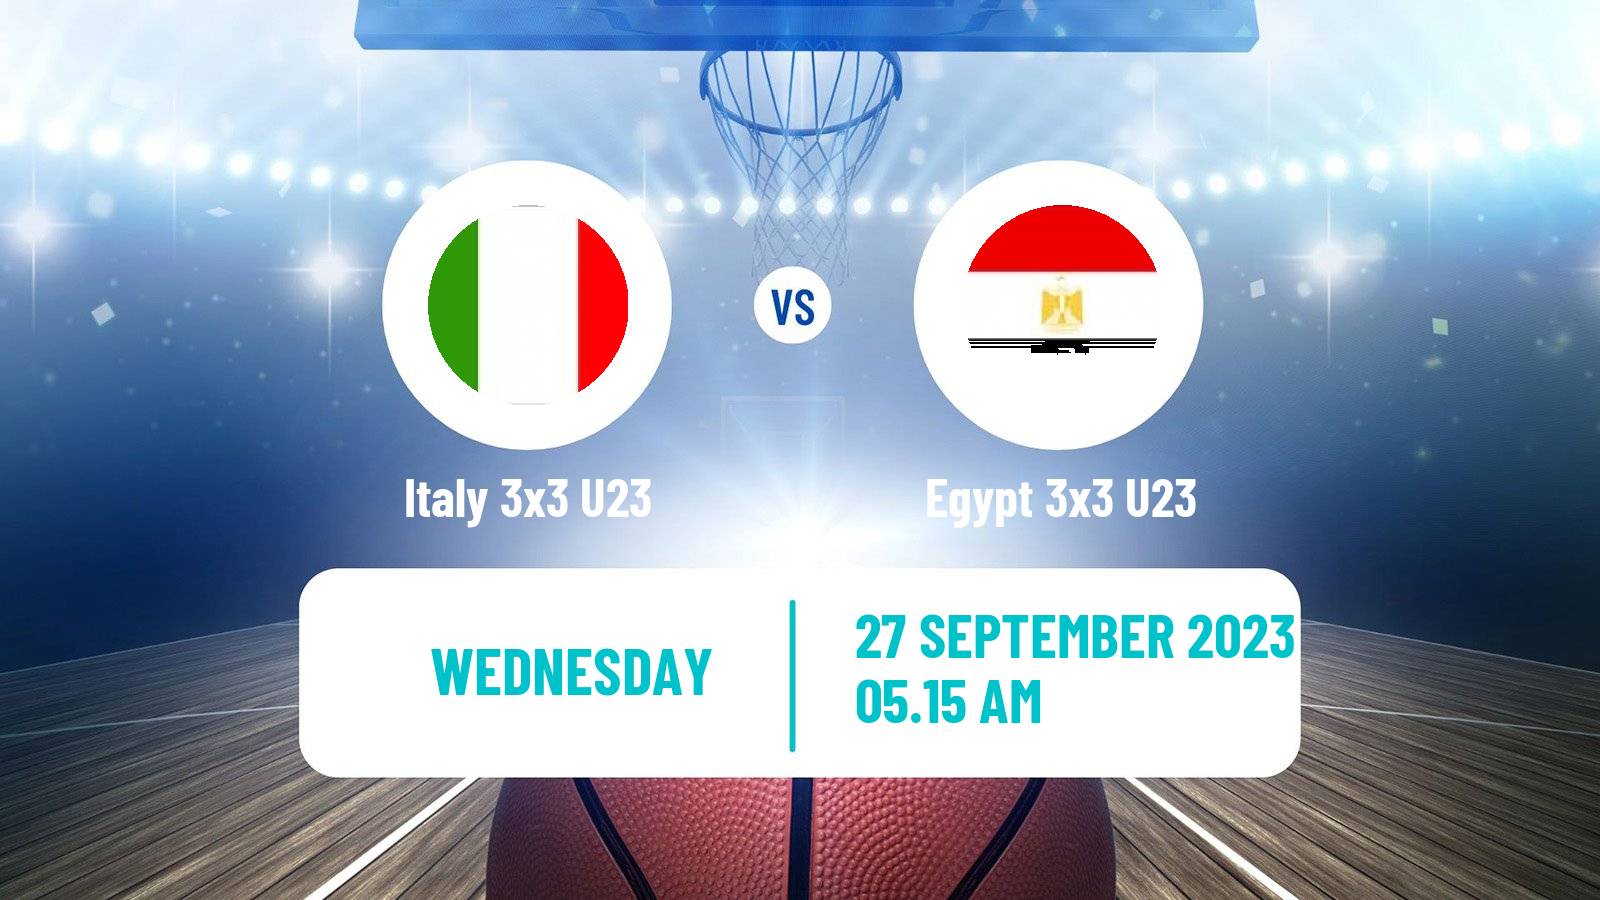 Basketball World Cup Basketball 3x3 U23 Italy 3x3 U23 - Egypt 3x3 U23